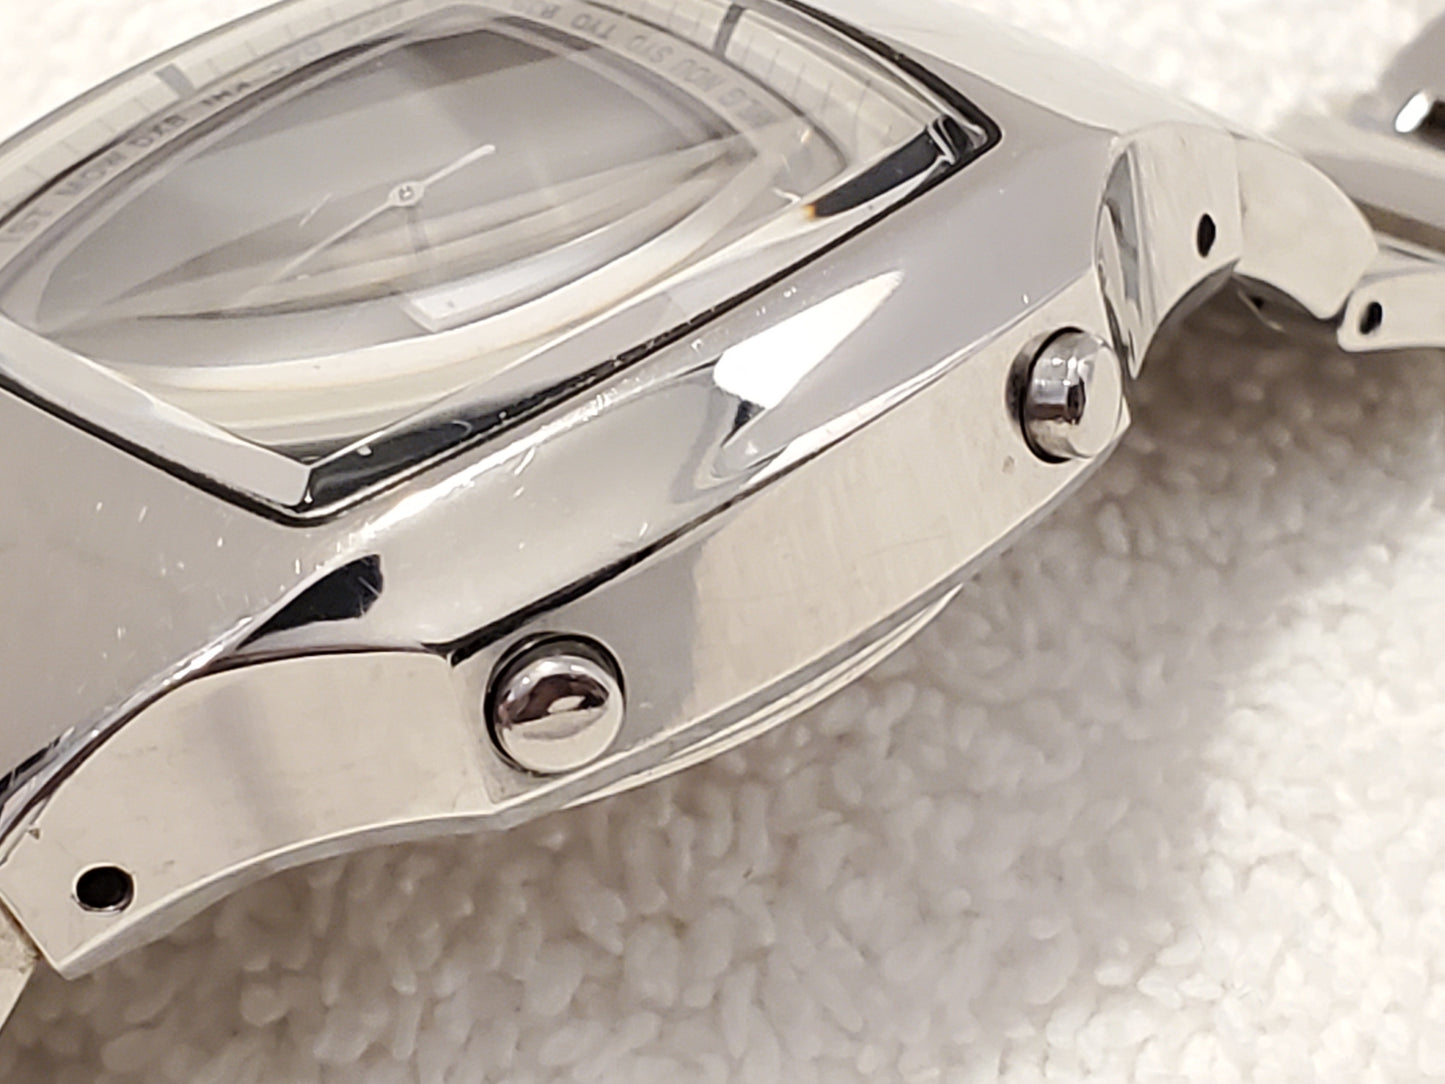 Vintage Seiko Men's Analog Digital Quartz Watch Five Jewels World Time Date Day Month Year